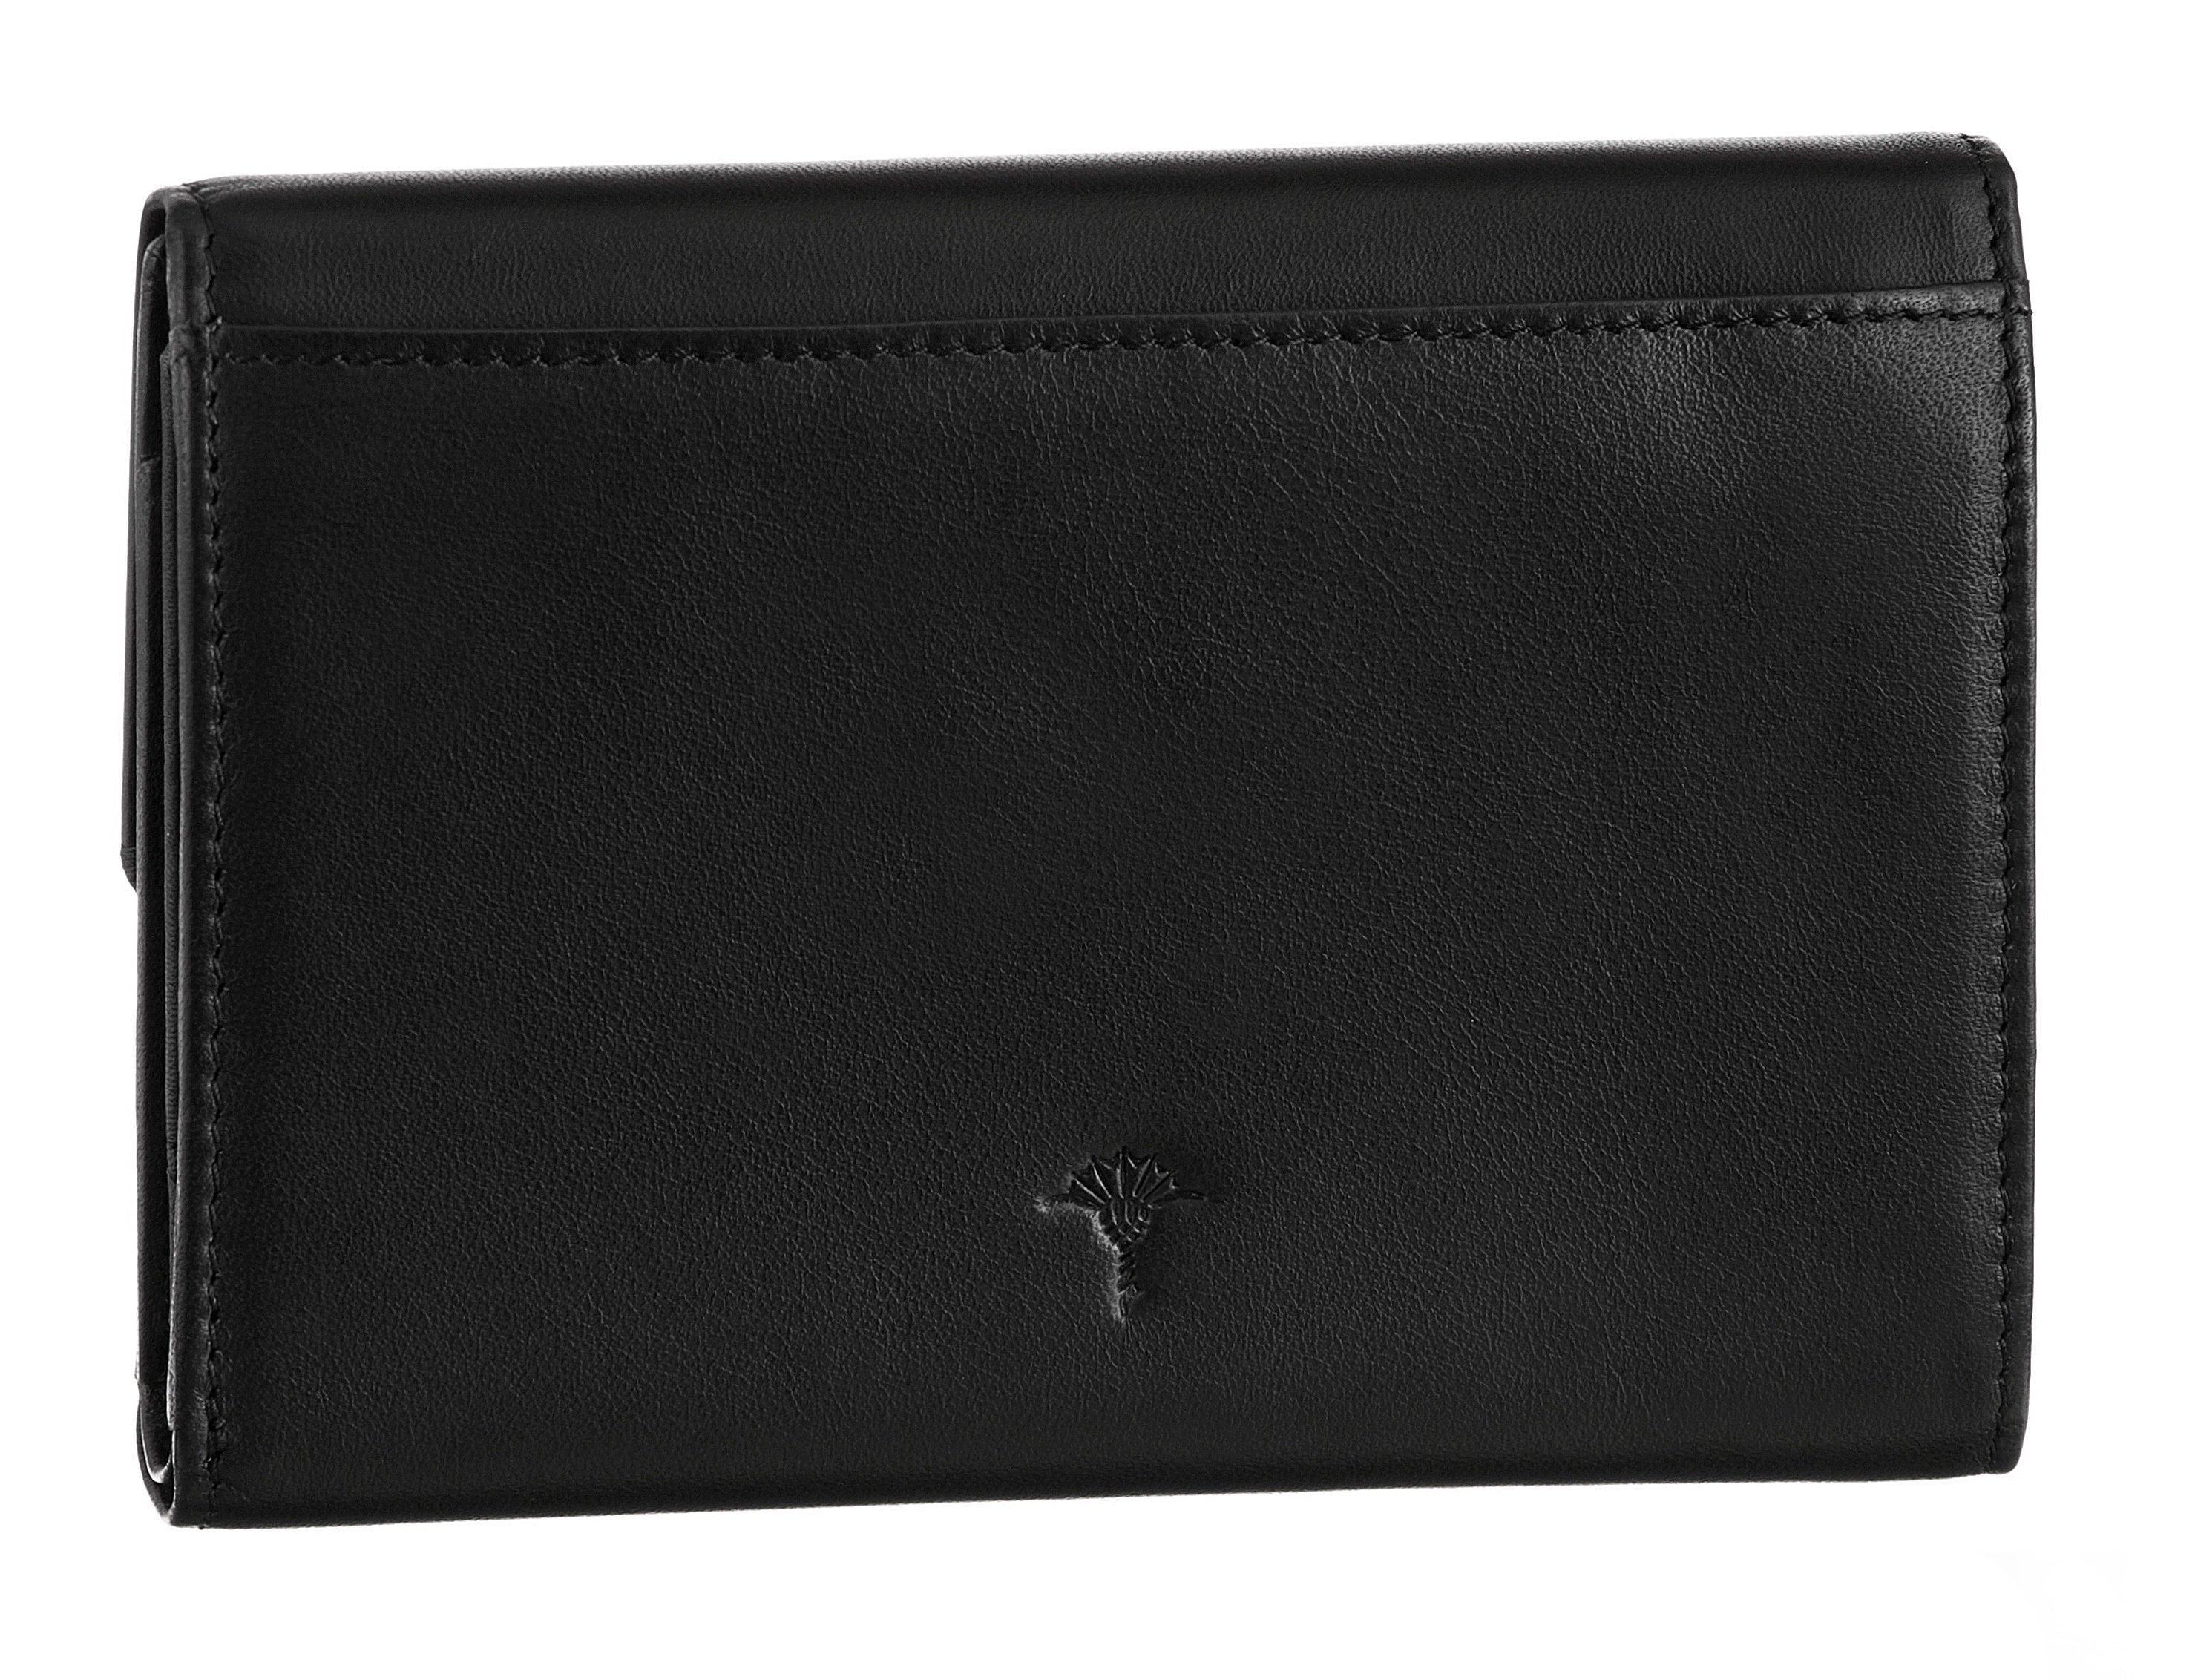 Joop! Geldbörse sofisticato 1.0 cosma black Design mh10f, schlichtem in purse